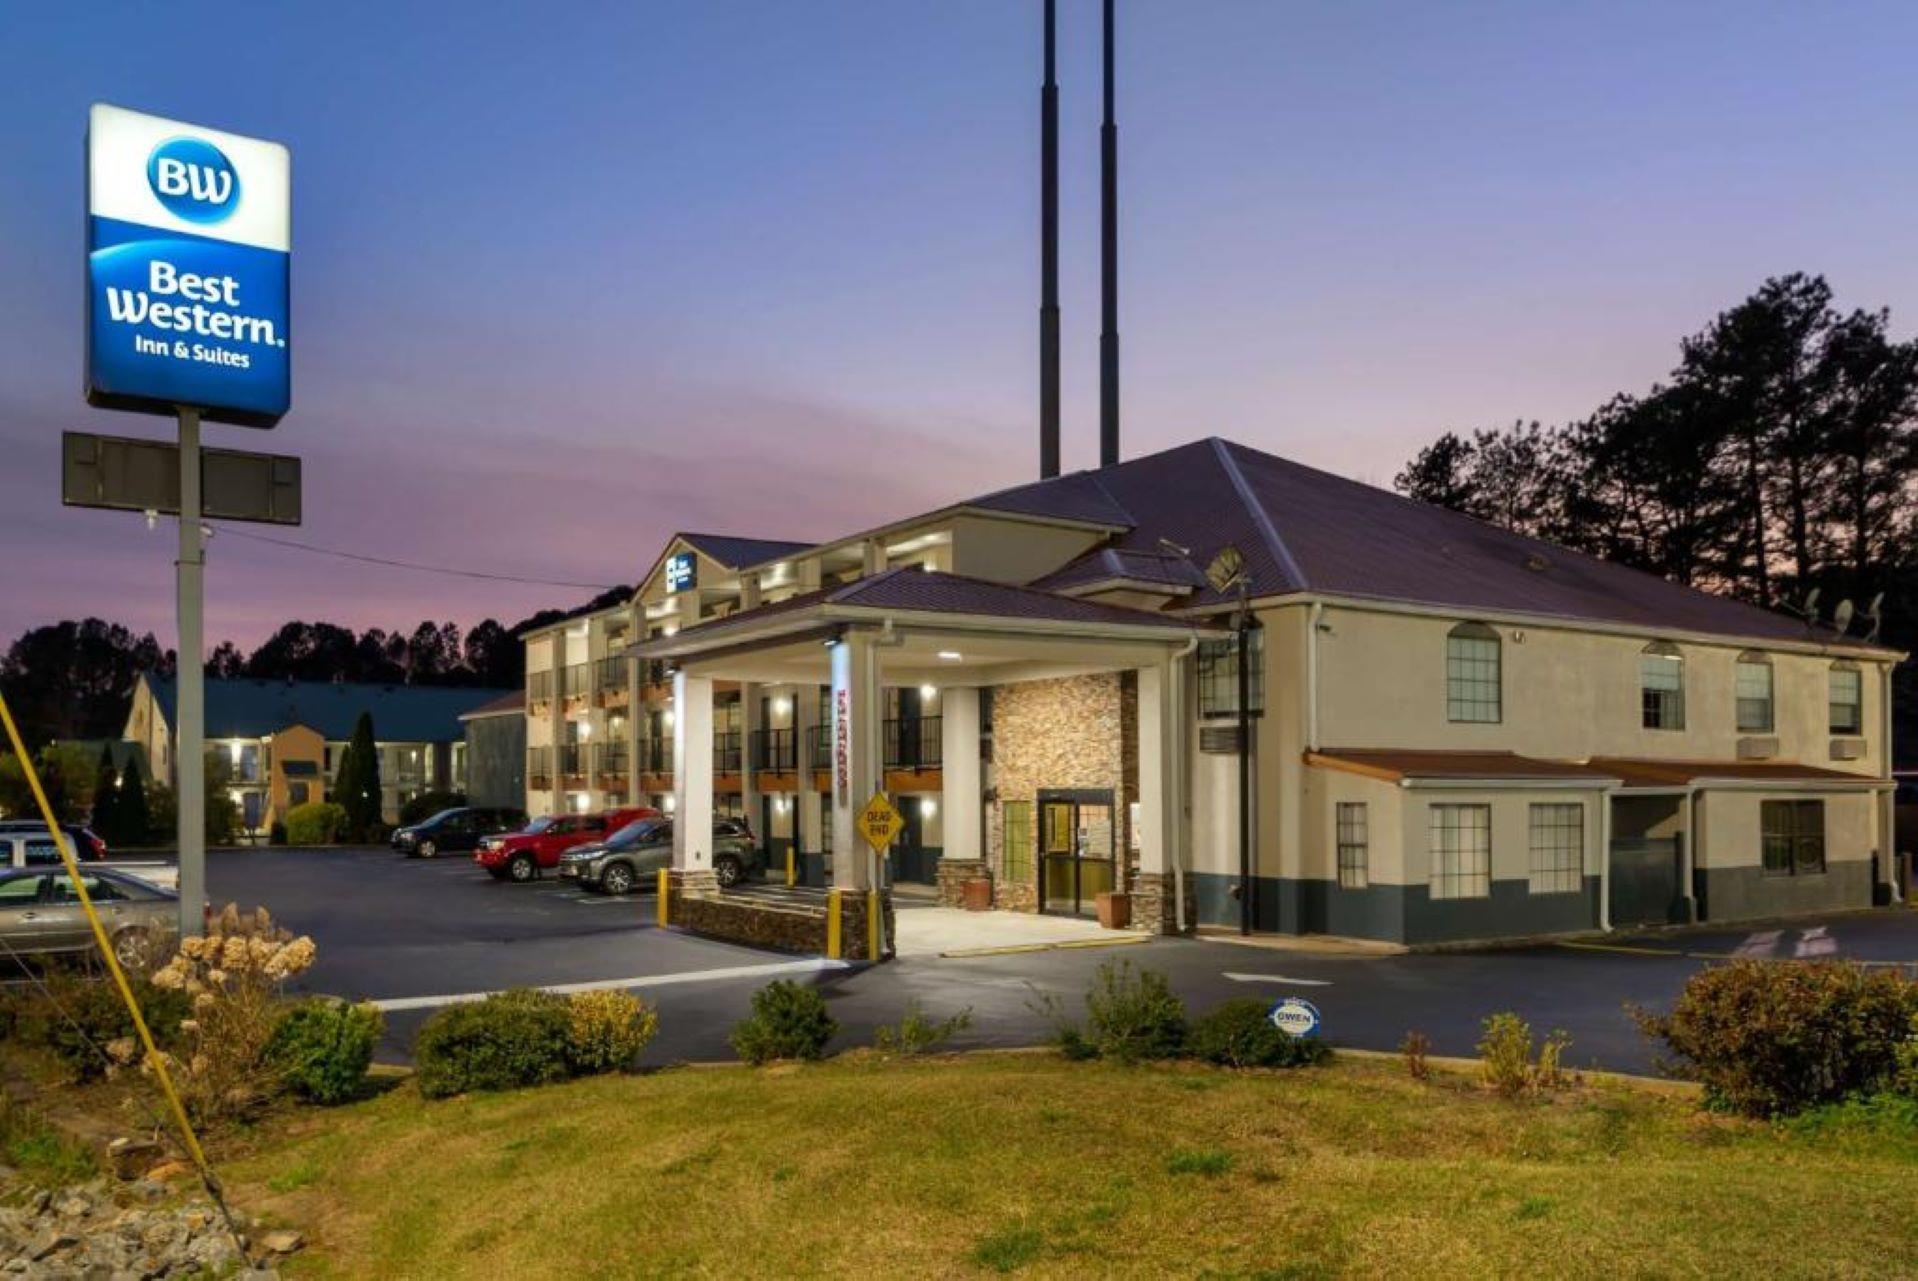 Best Western Allatoona Inn & Suites in Cartersville, GA